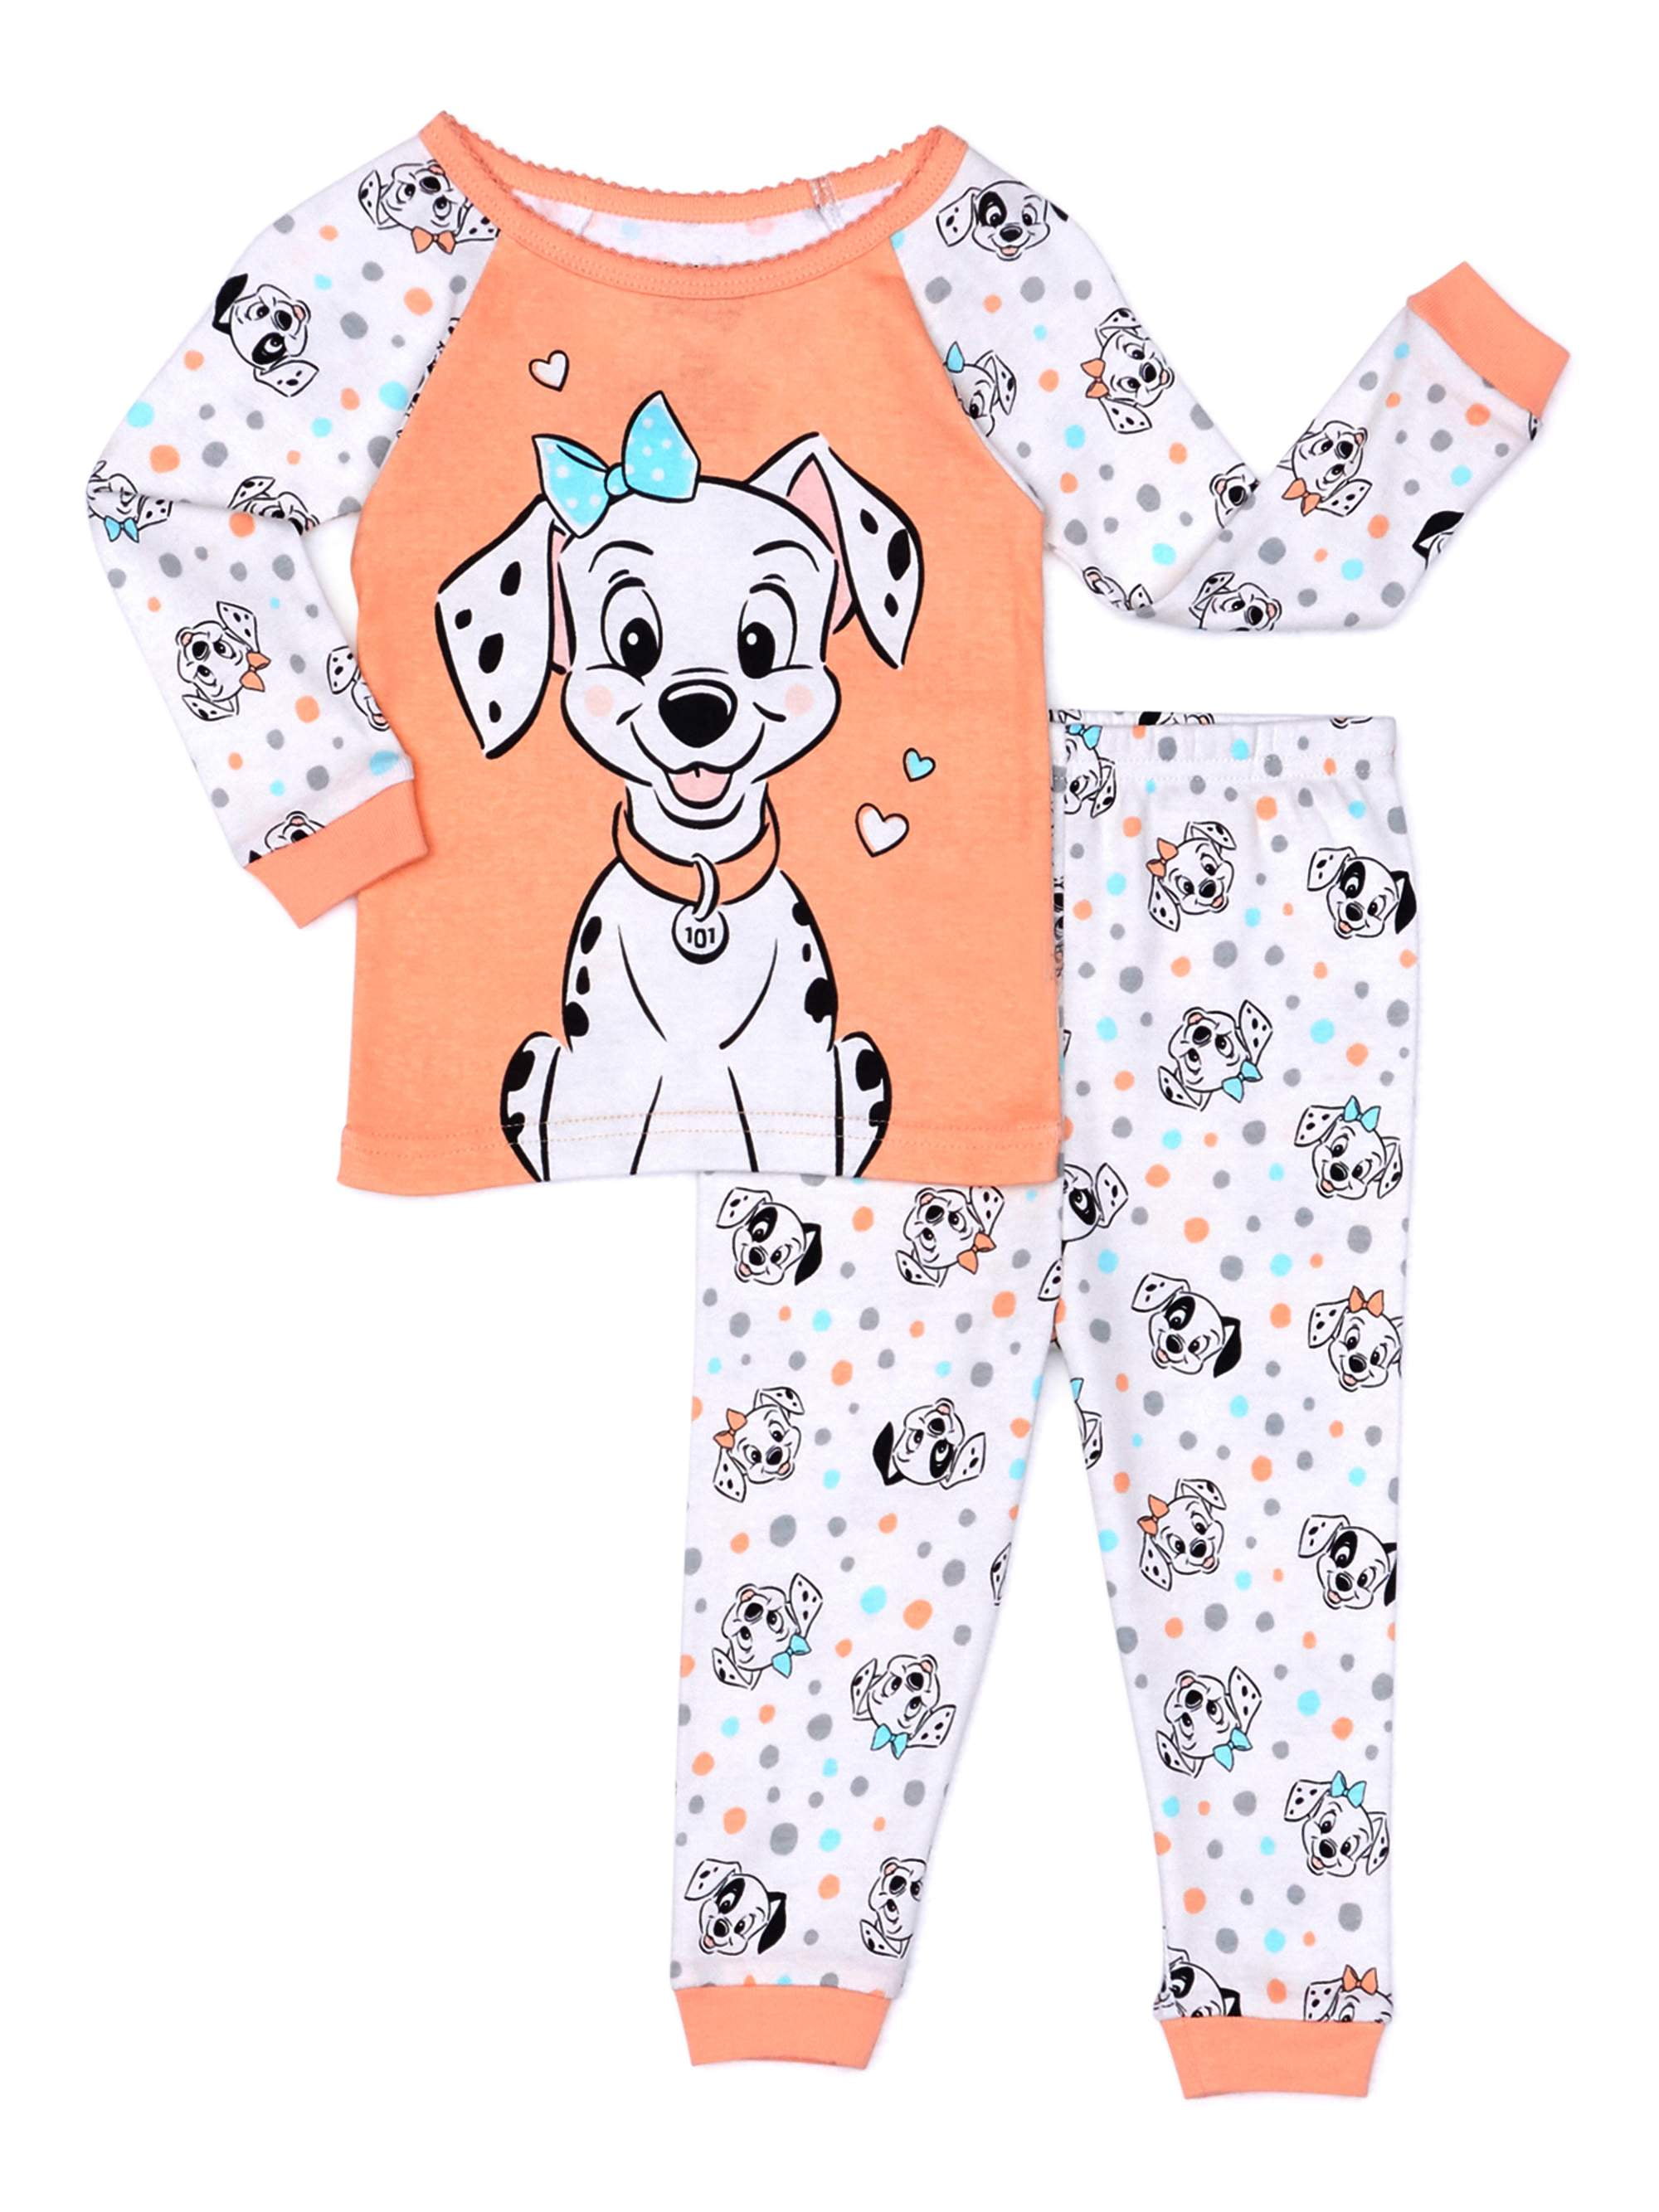 BNWT Baby Girls Disney 101 DALMATIANS Puppy Dog Sleepsuit & Hat Outfit Set 0-3m 